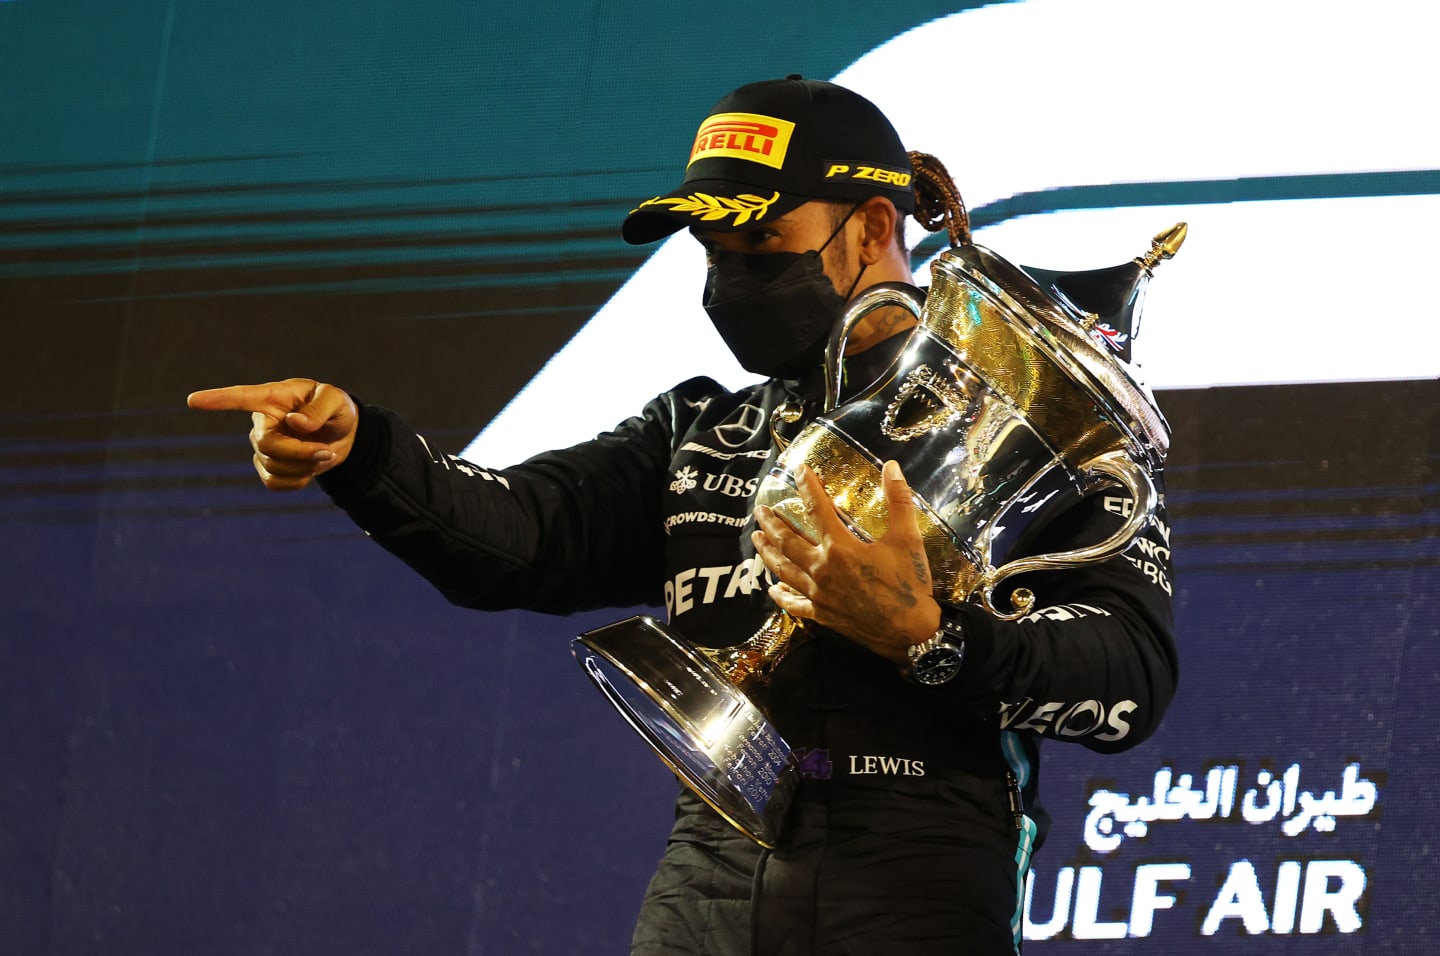 BAHRAIN, BAHRAIN - MARCH 28: Race winner Lewis Hamilton of Great Britain and Mercedes GP celebrates